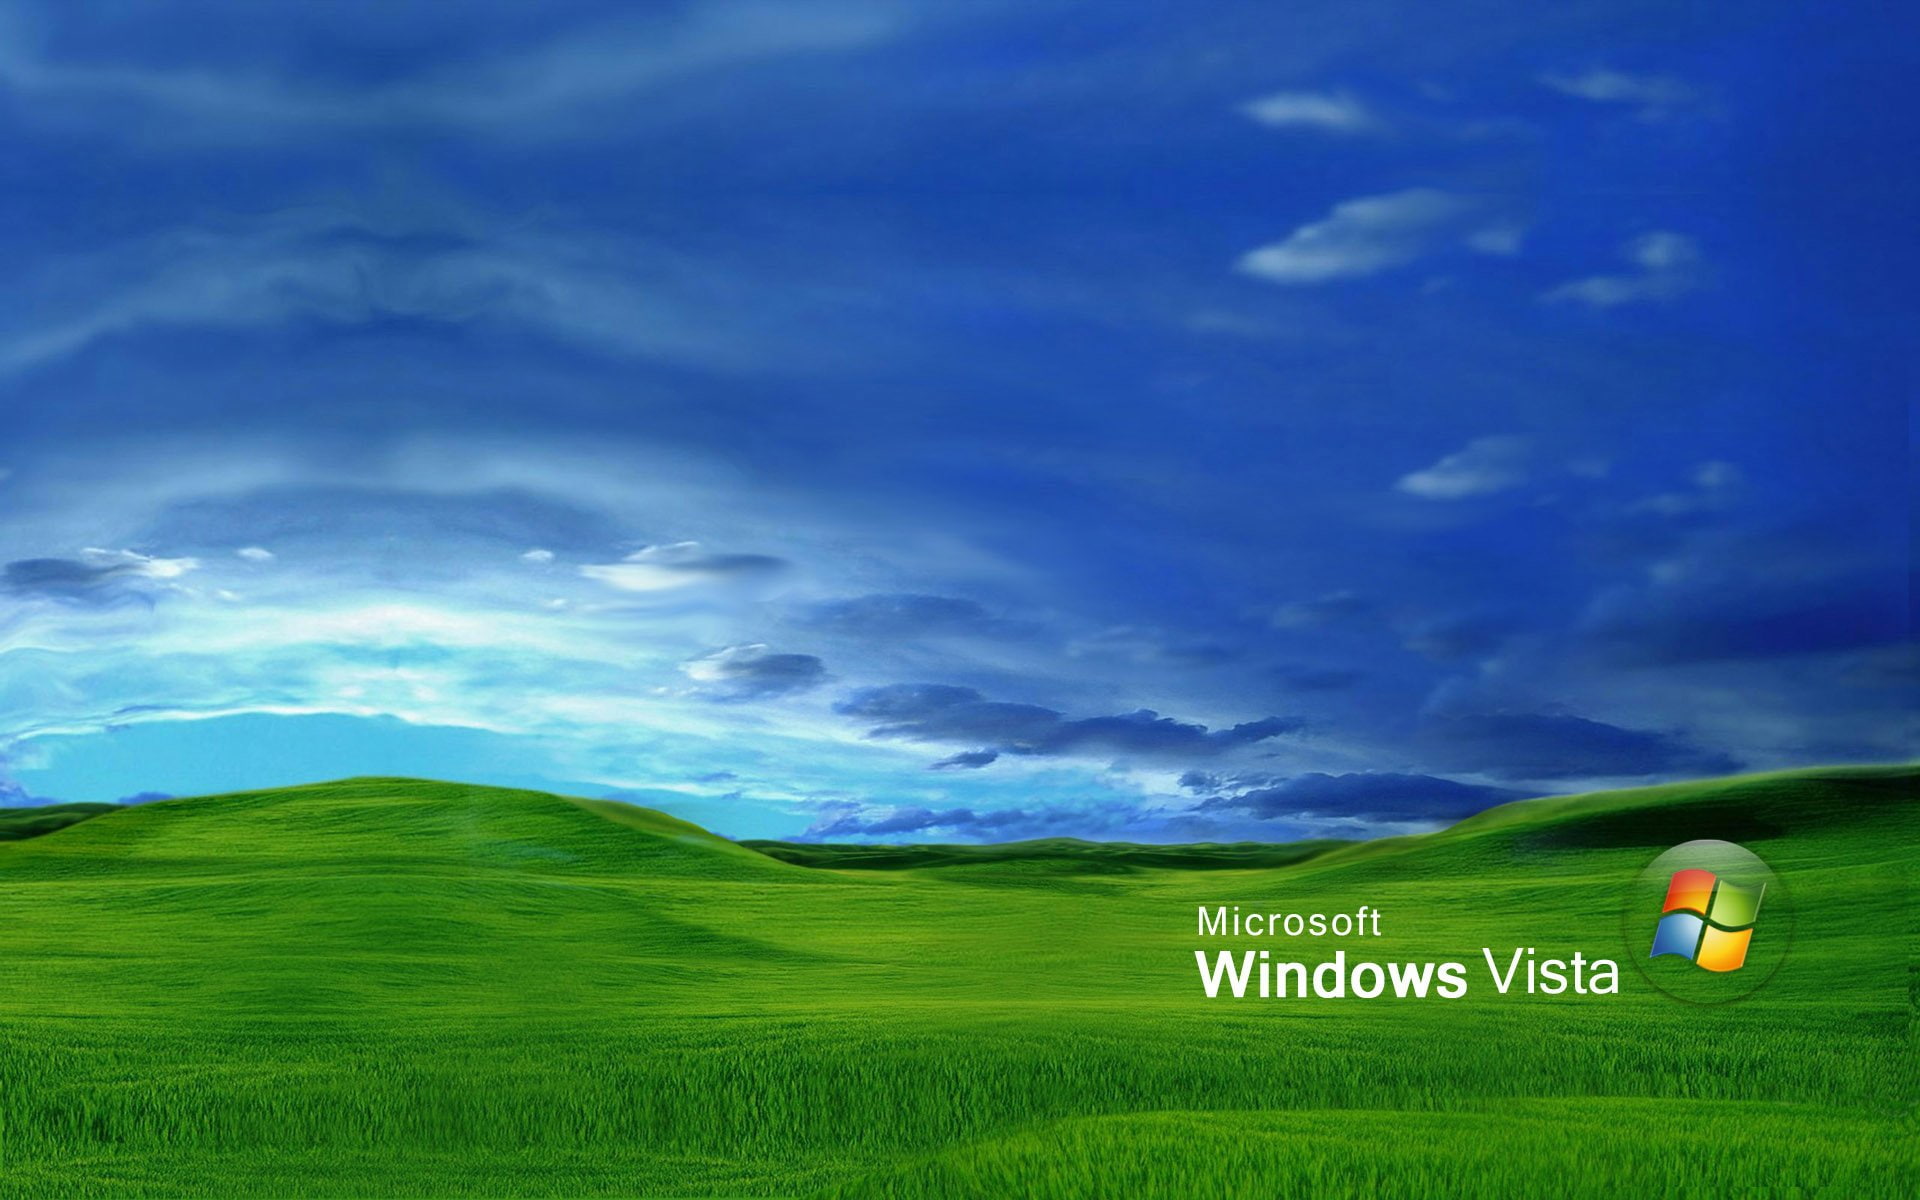 Microsoft Windows Vista wallpaper